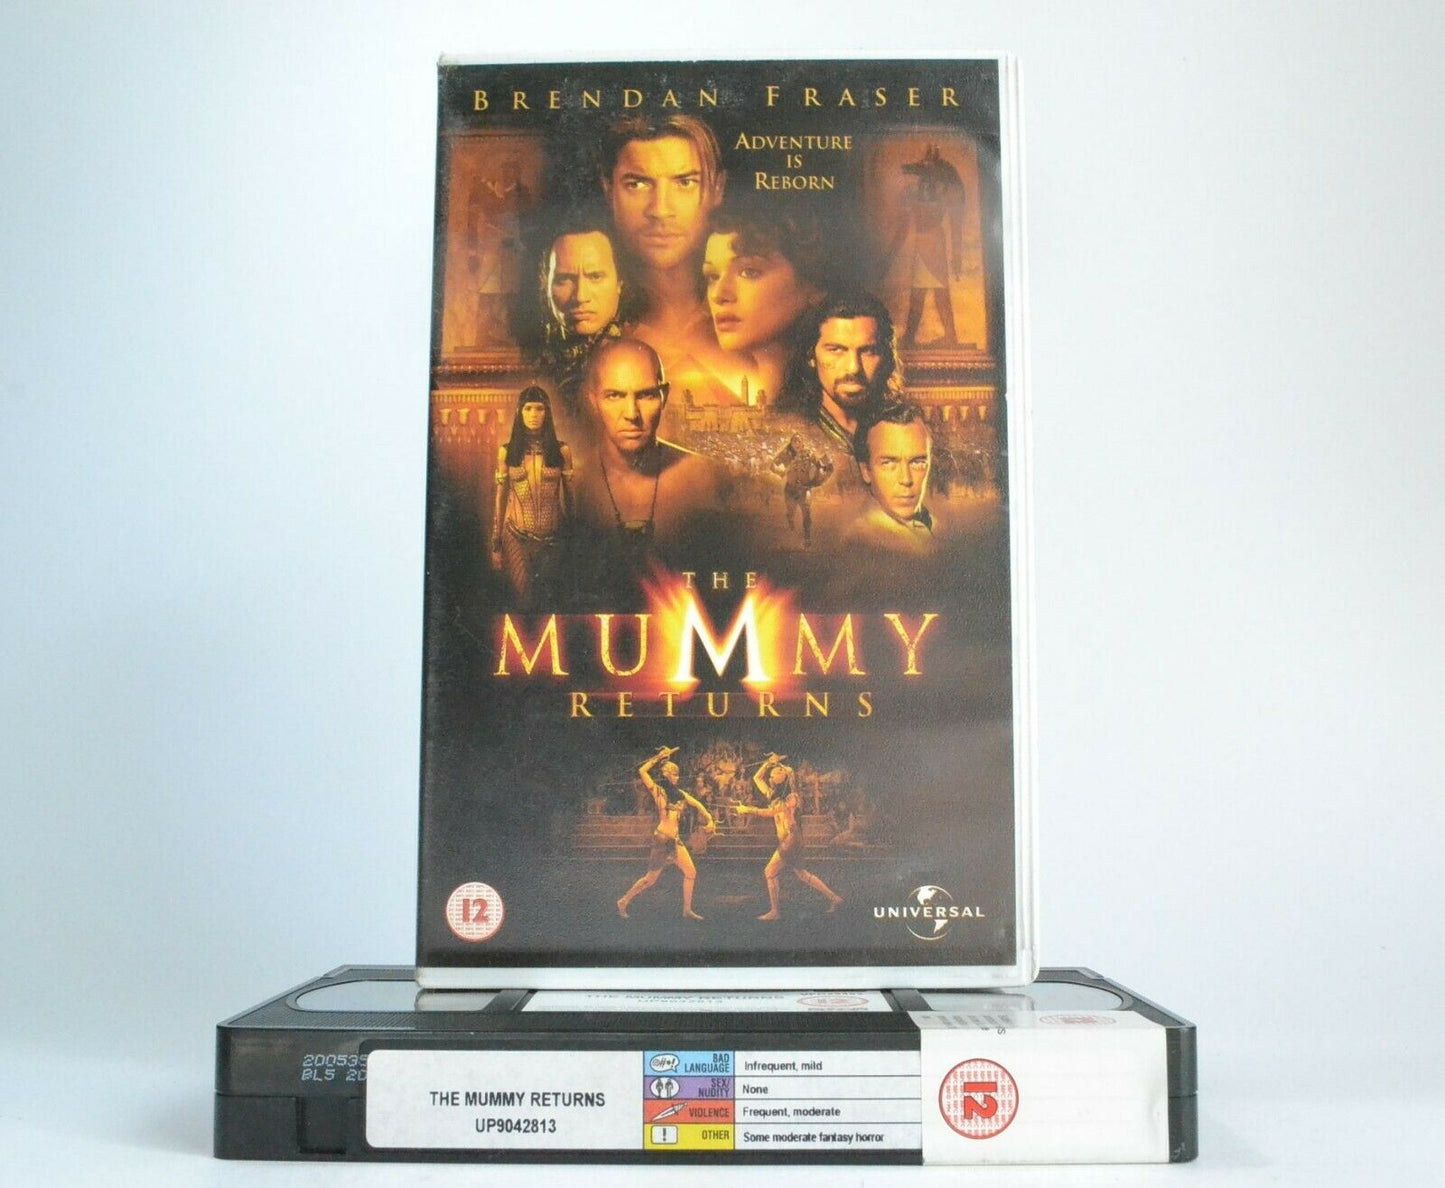 The Mummy Returns (2001): Adventure Is Reborn - Large Box - Brendan Fraser - VHS-